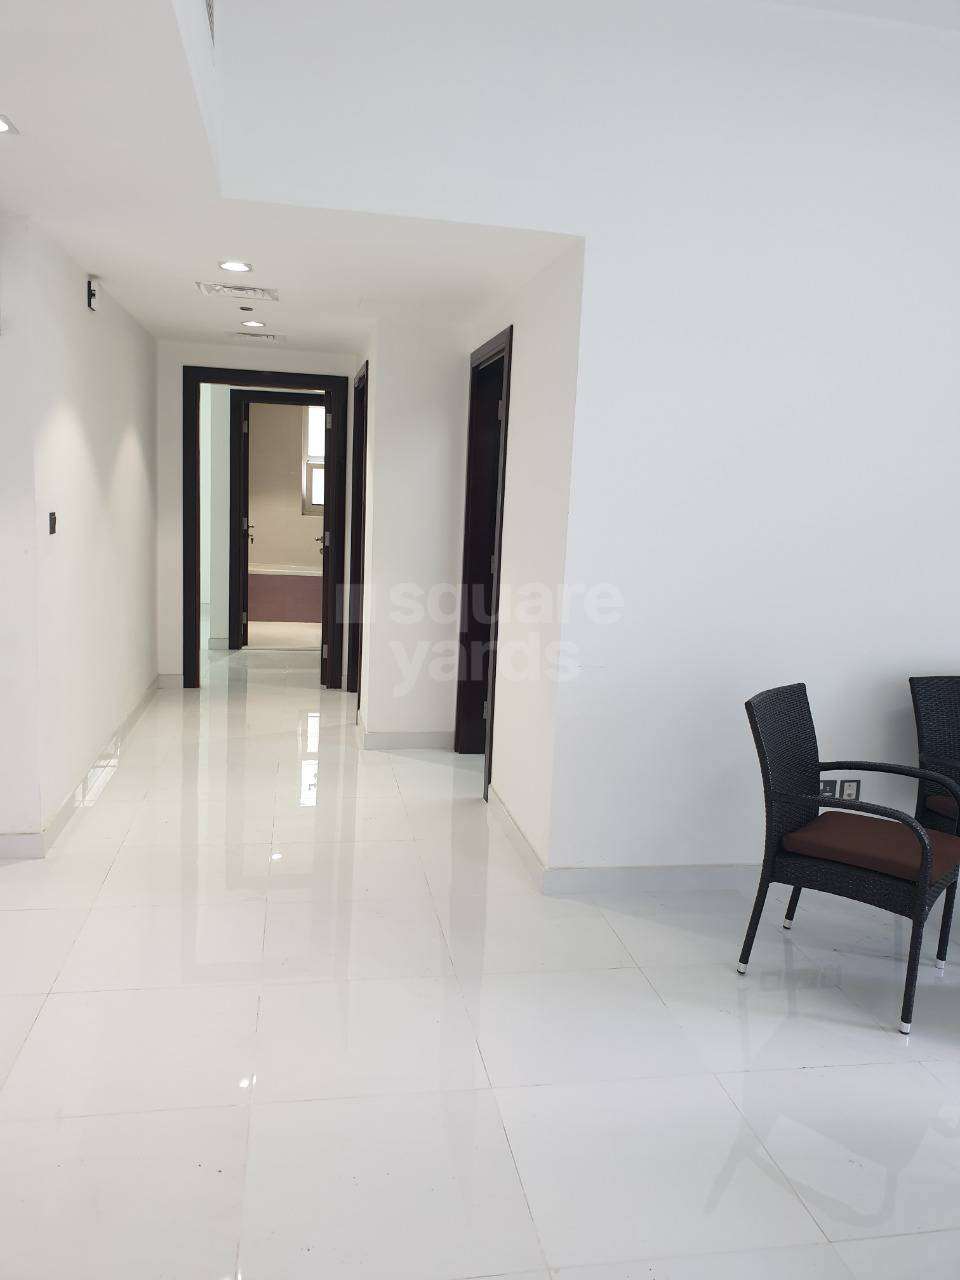 1 BR 1200 Sq.Ft. Apartment in Arabian Gates